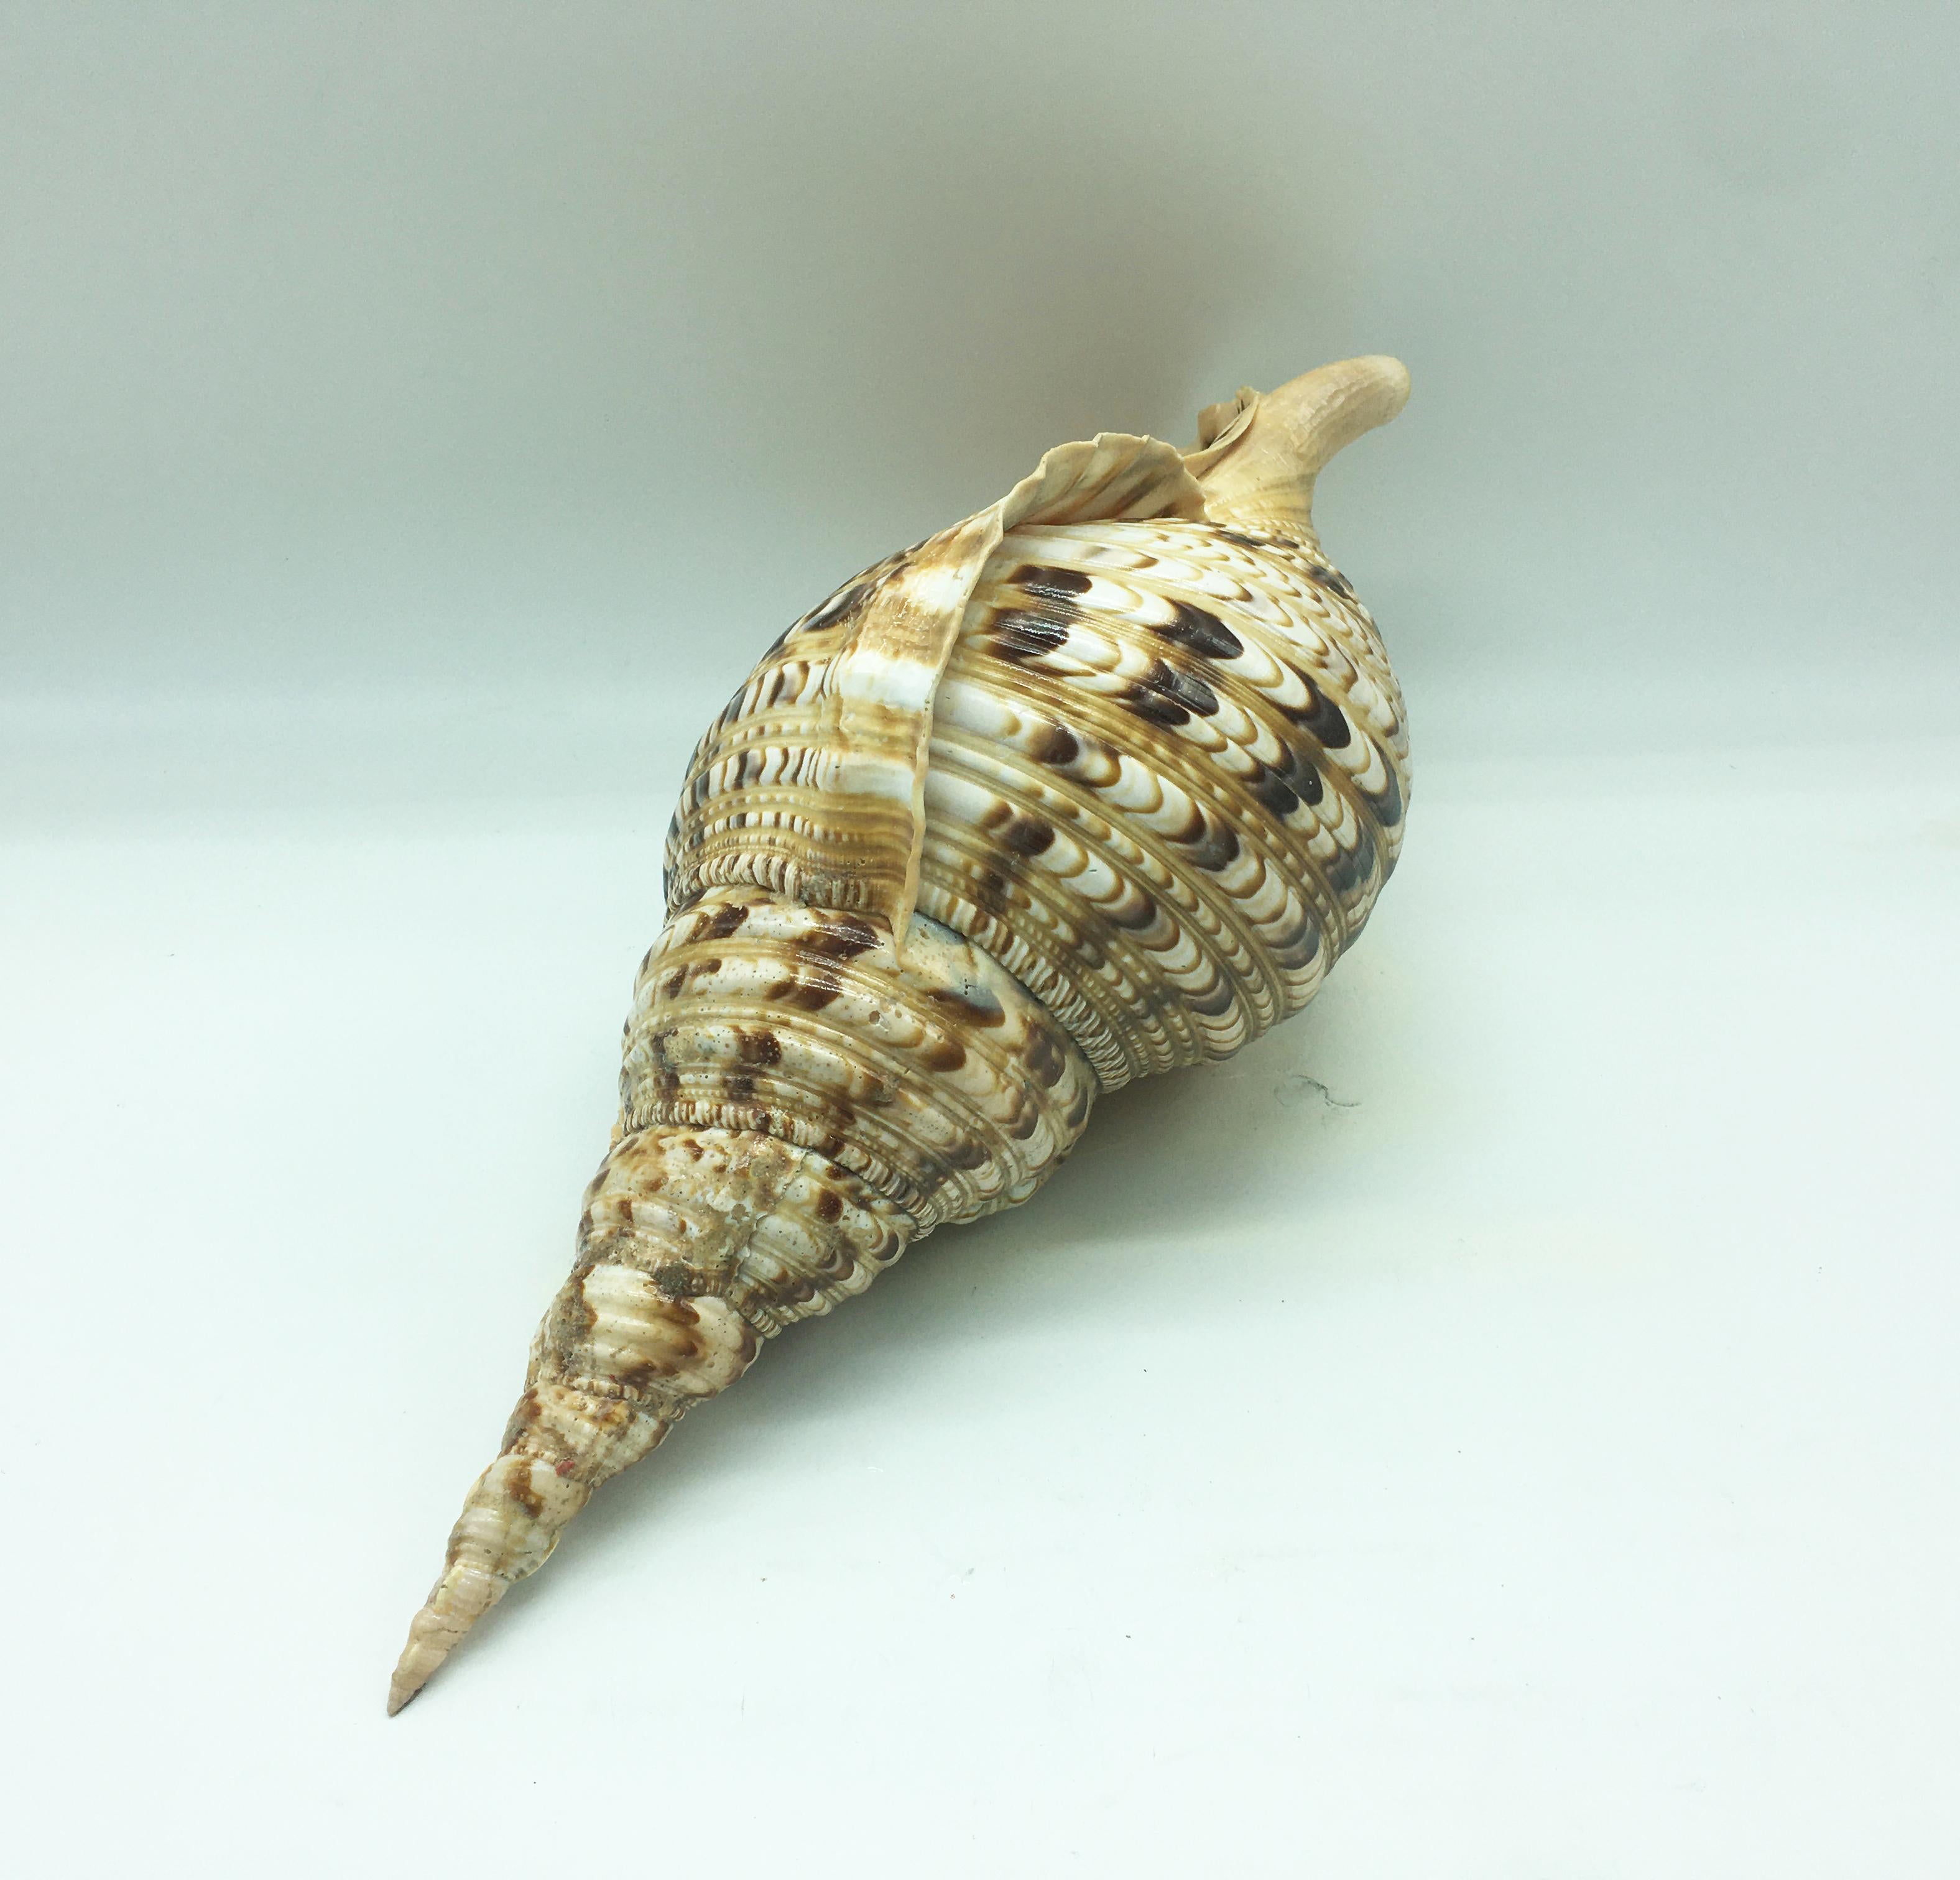 triton trumpet snail